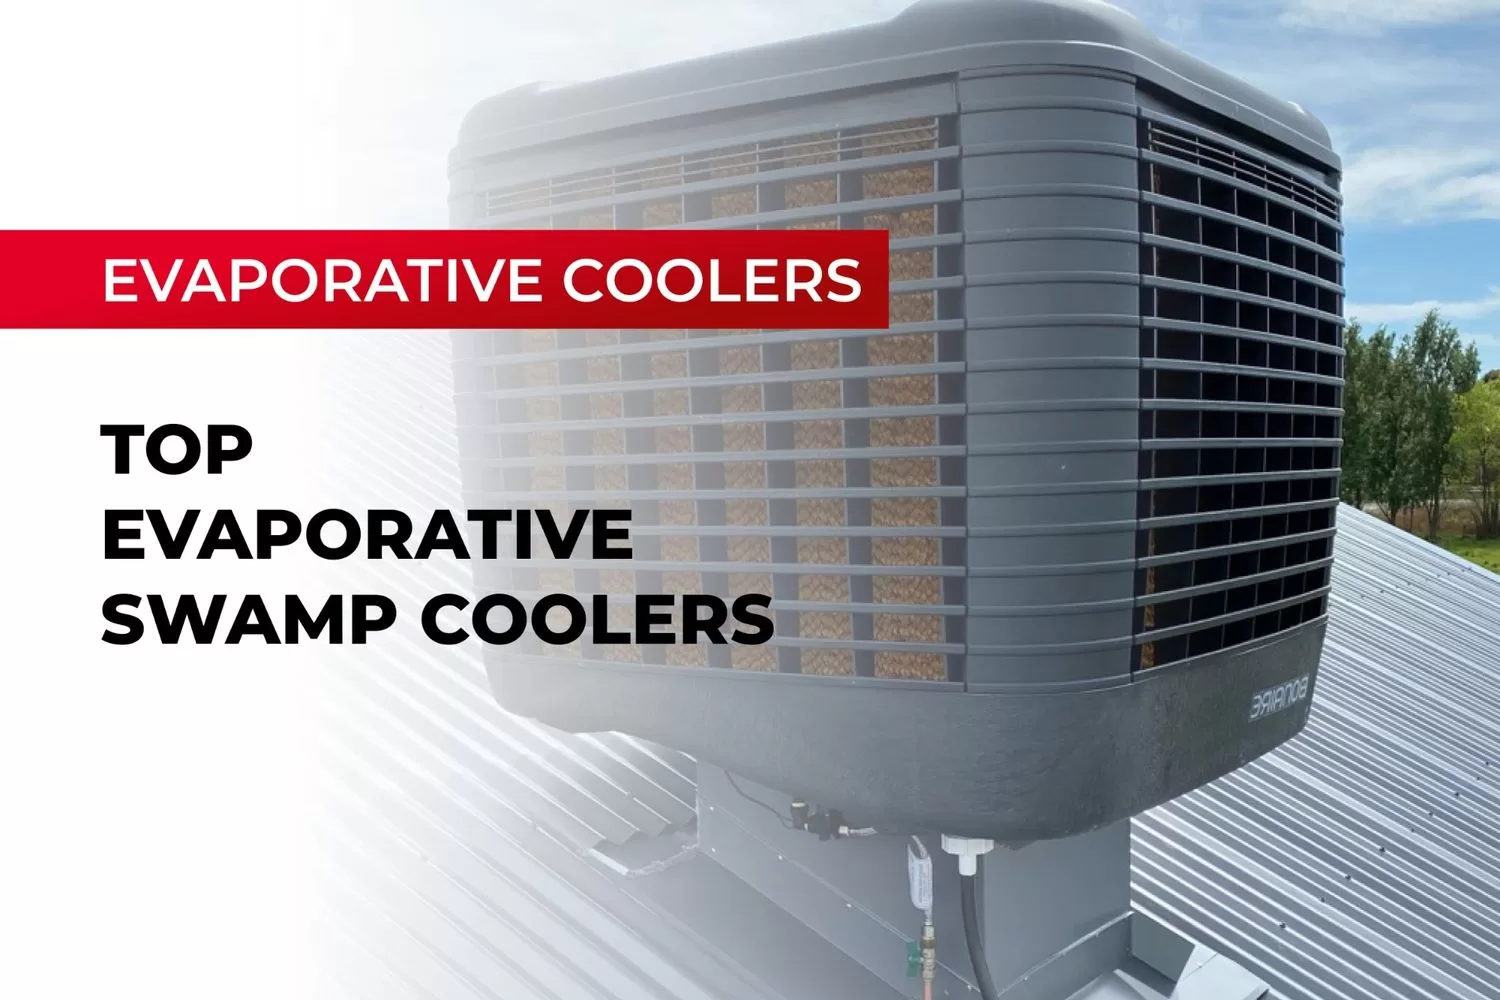 Top Evaporative Swamp Coolers